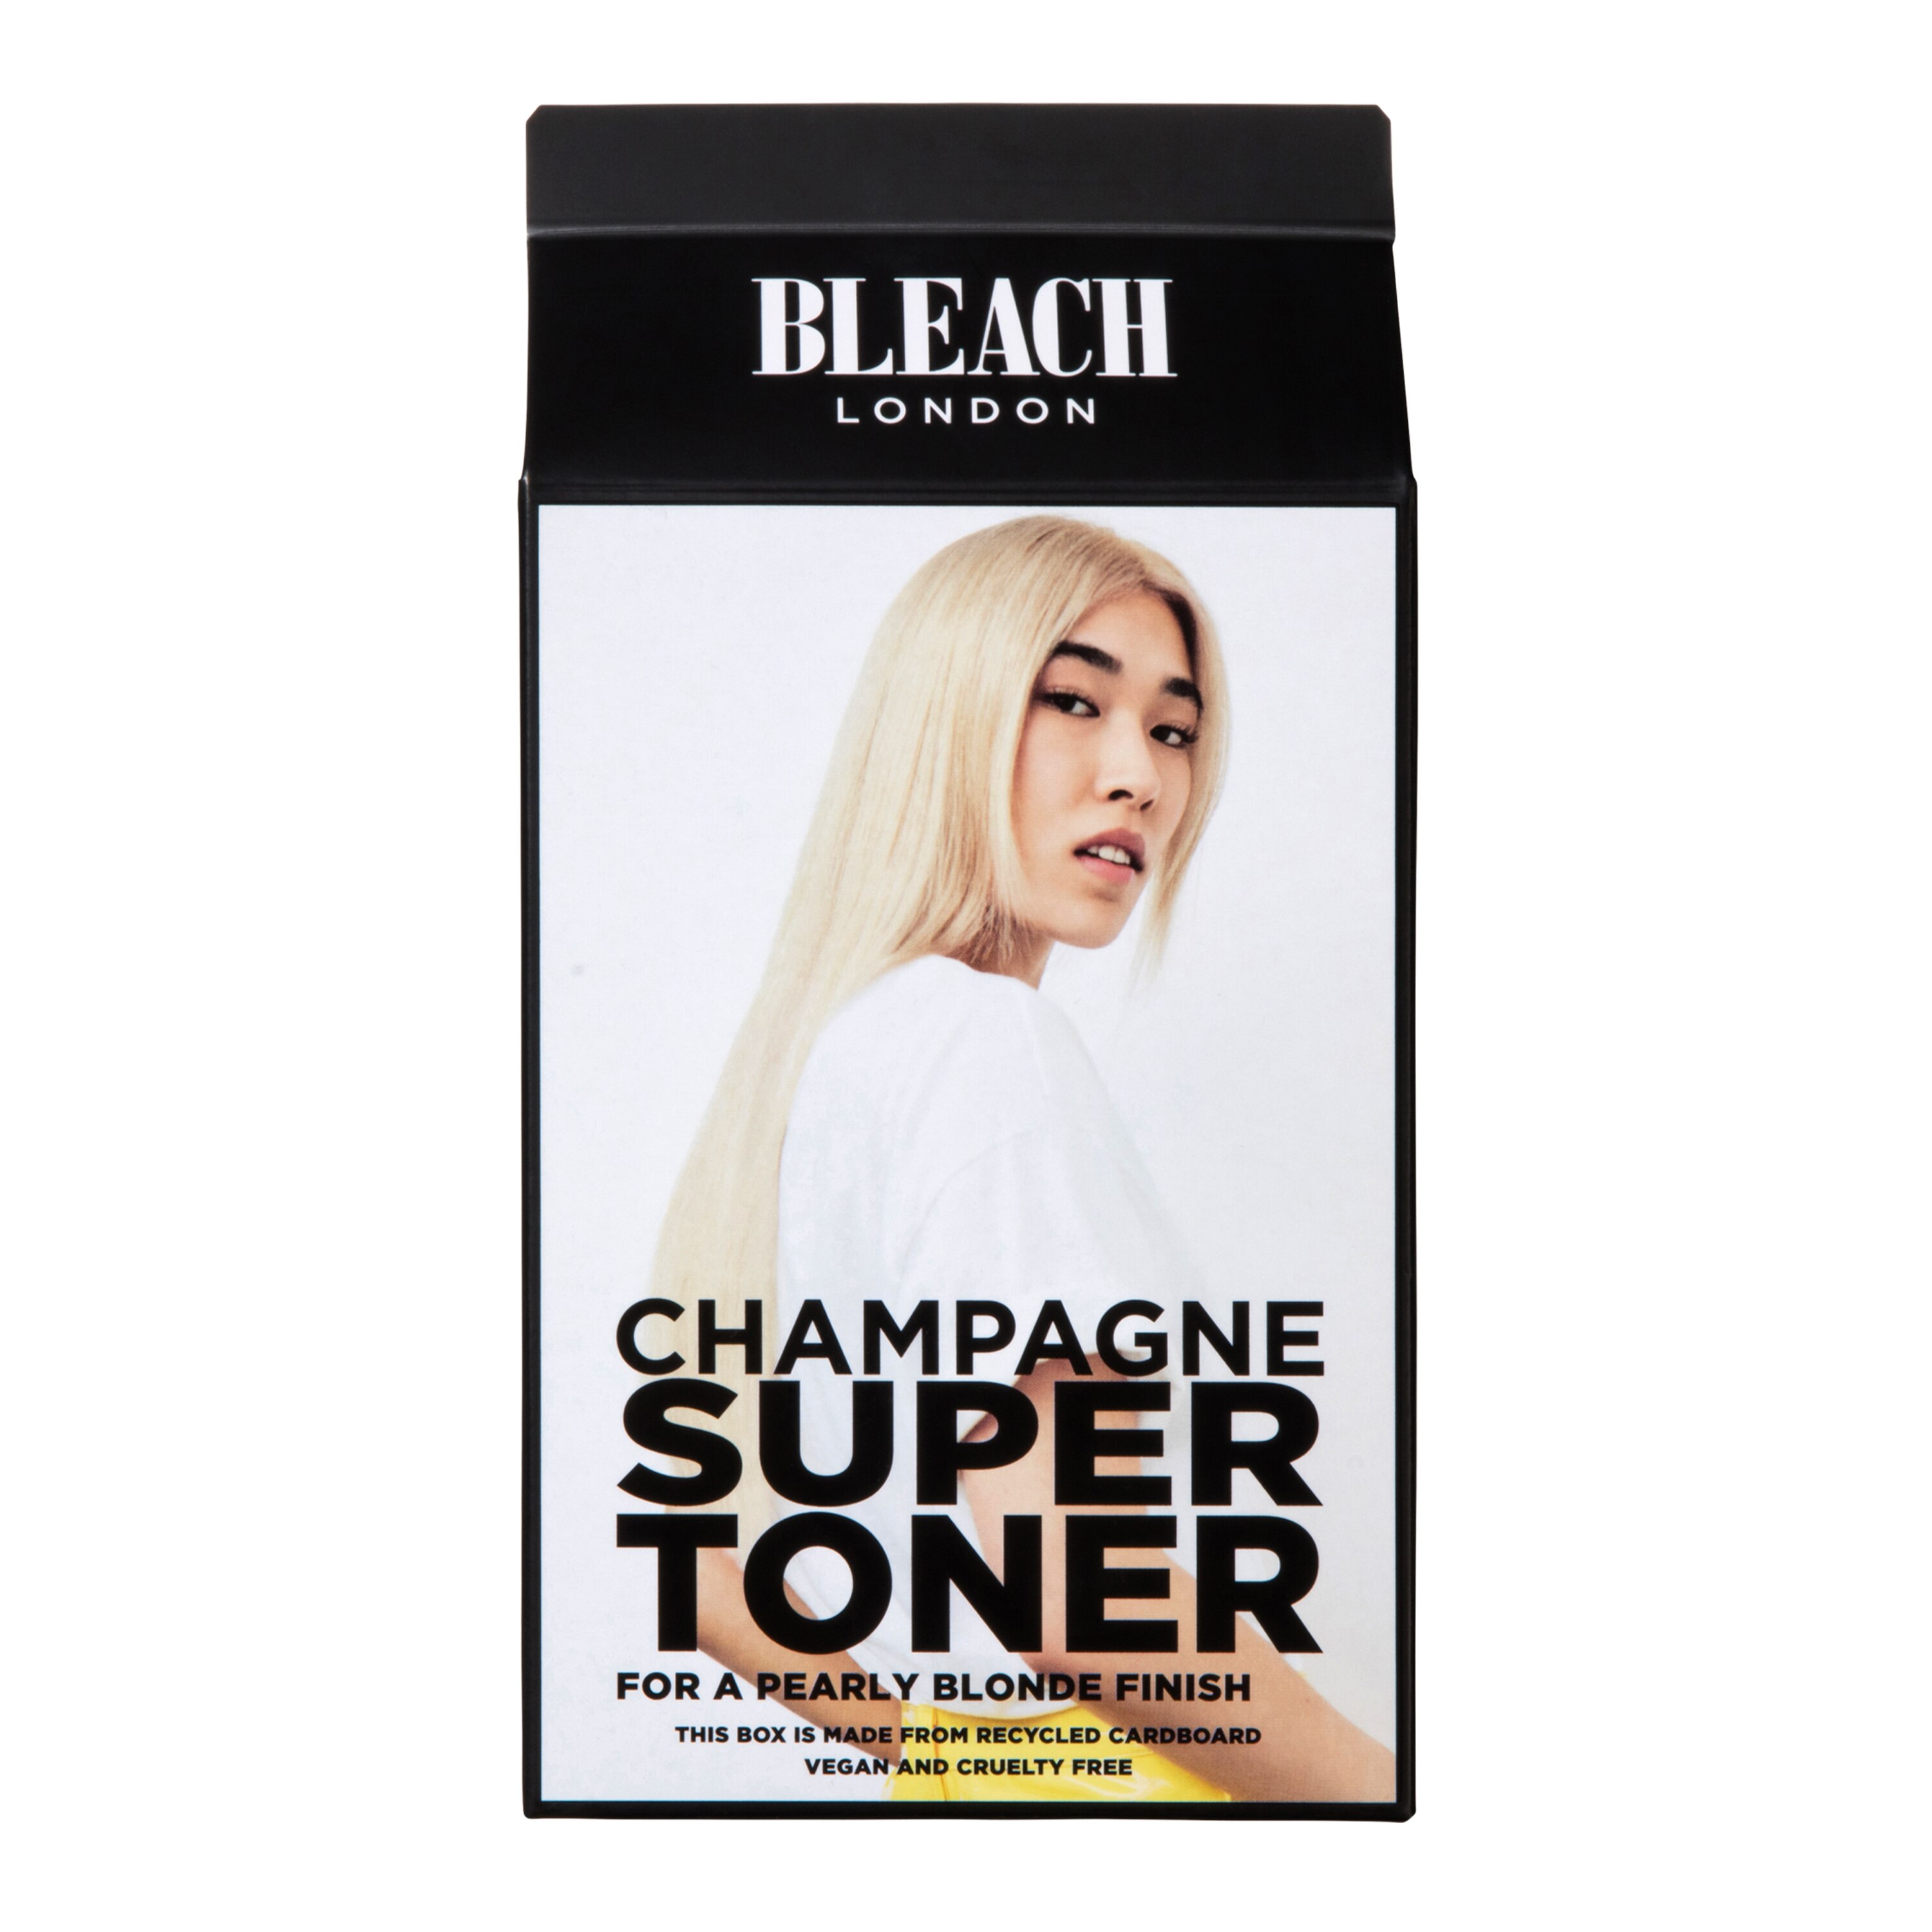 Bleach London Champagne Super Toner Kit - 1 , CVS